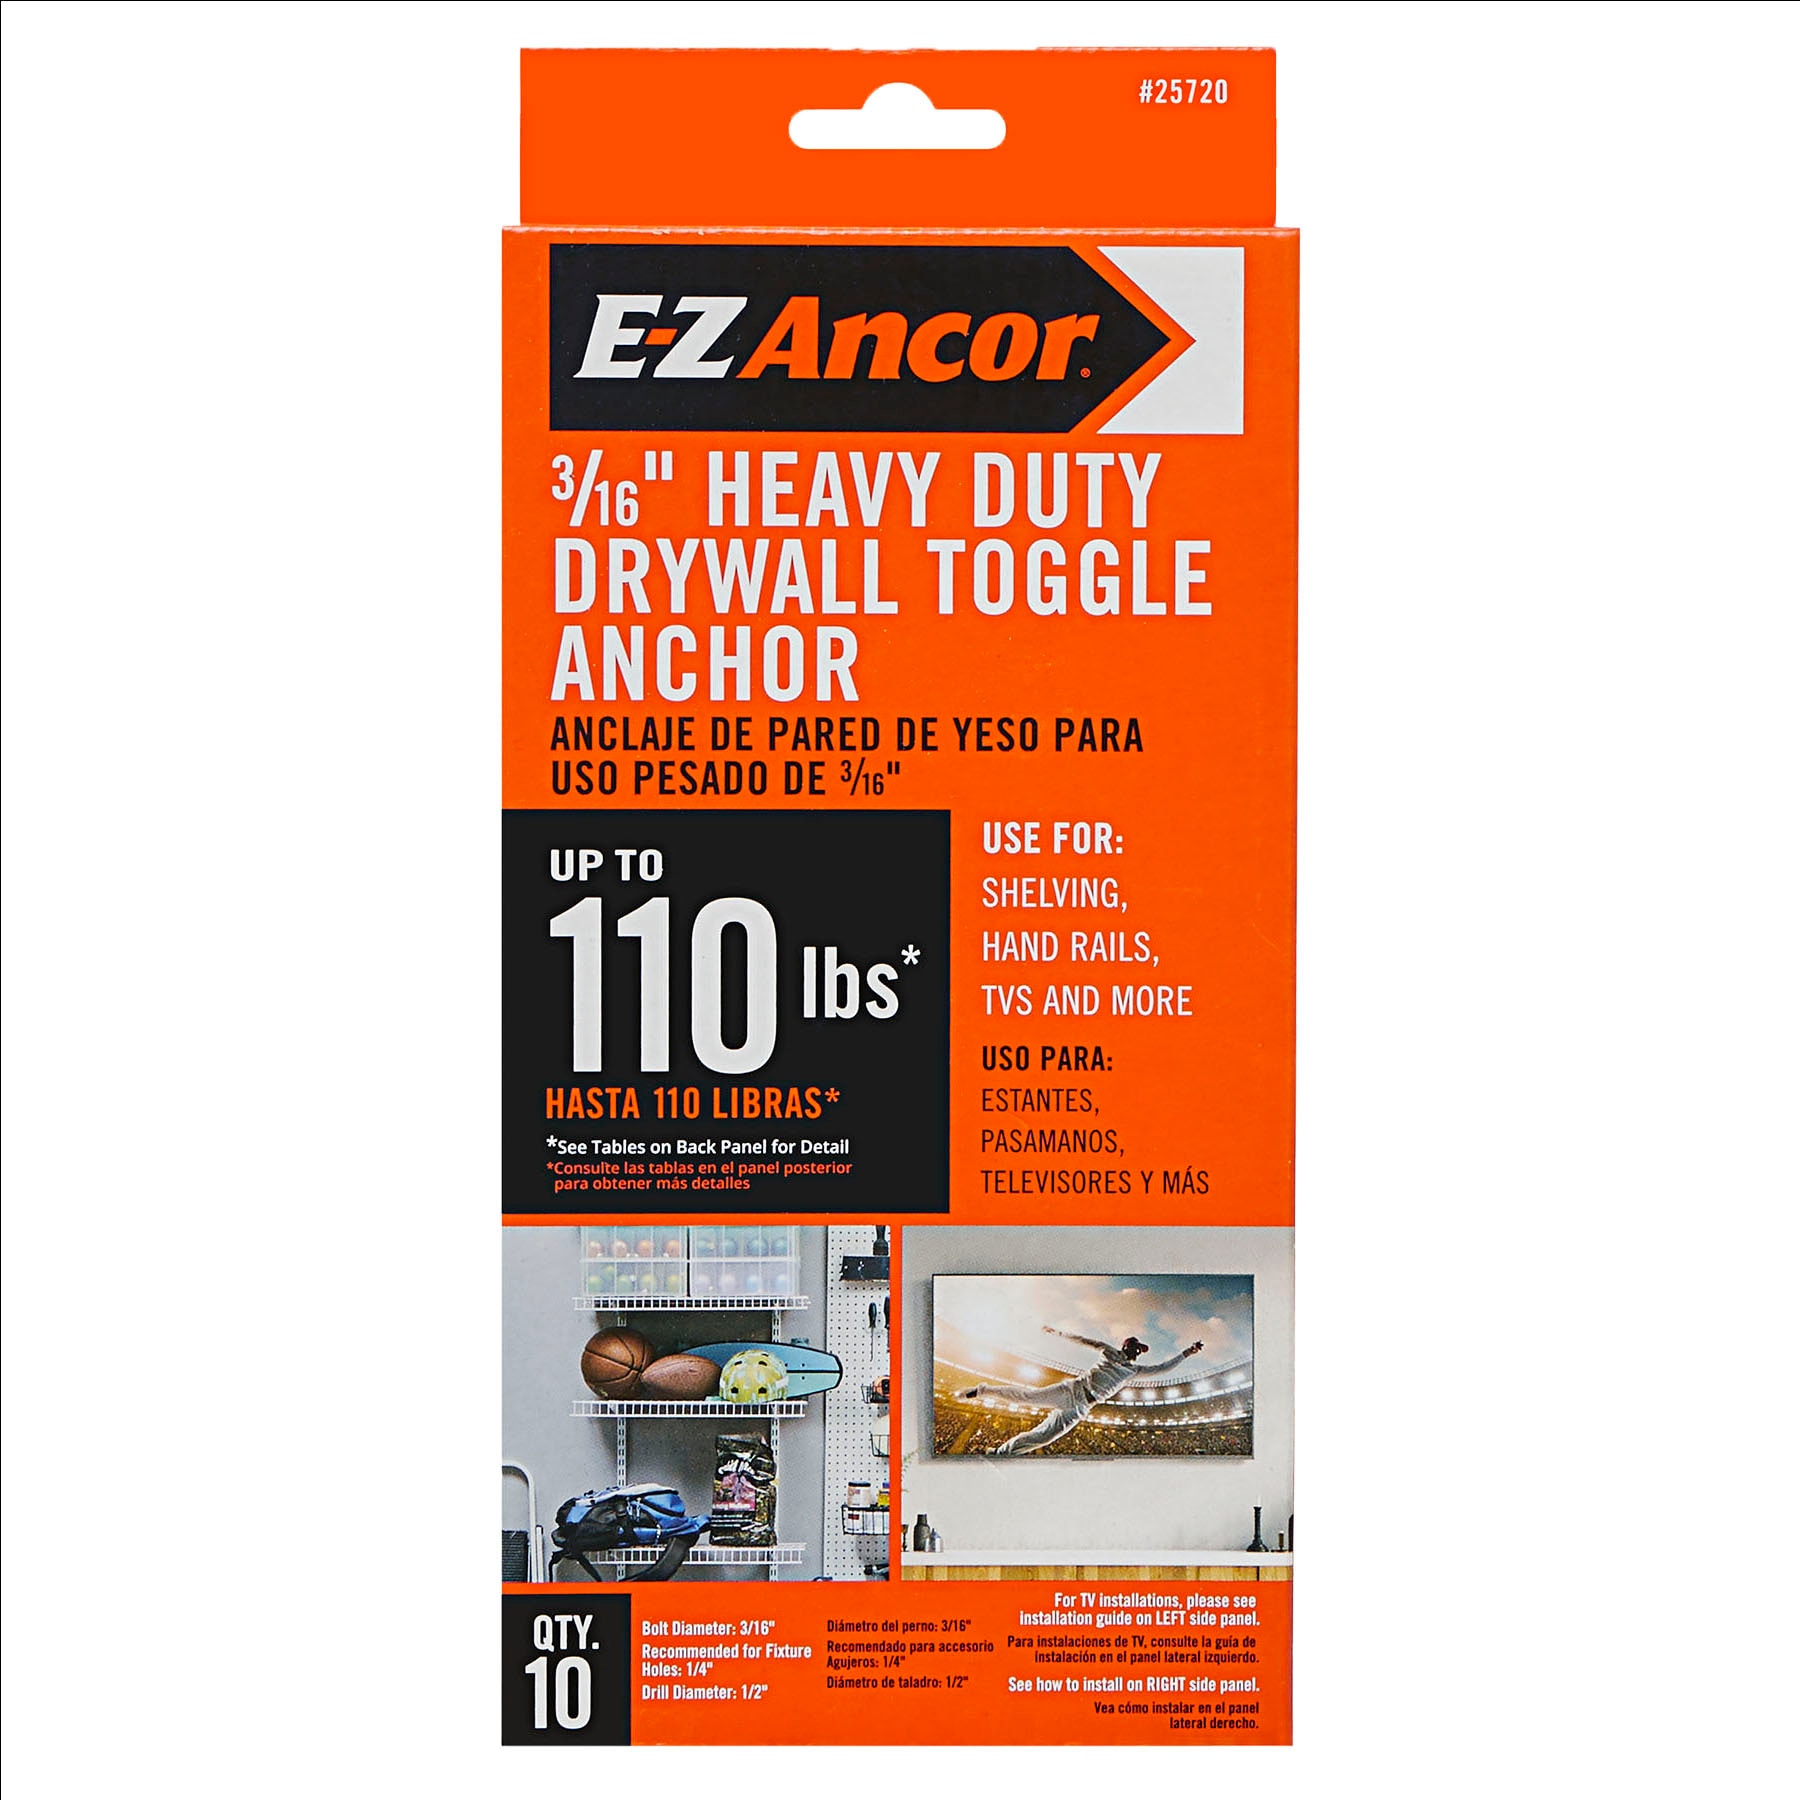 drywall anchor sizes